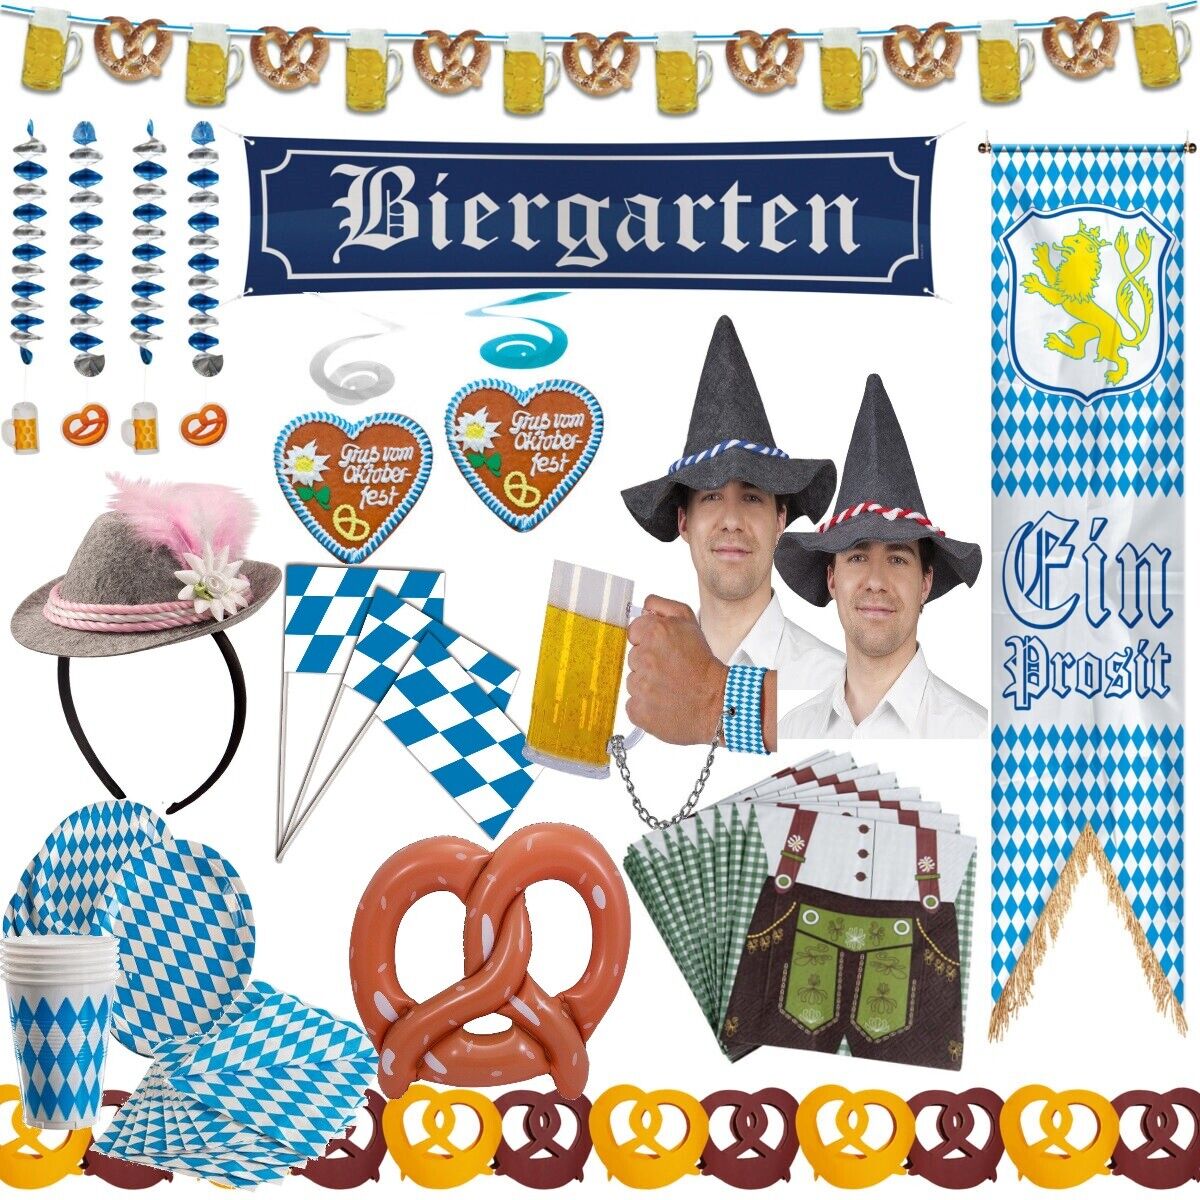 OKTOBERFEST Party Dekoration Bayern Gaudi Bavaria Wiesn blau weiss Raute 